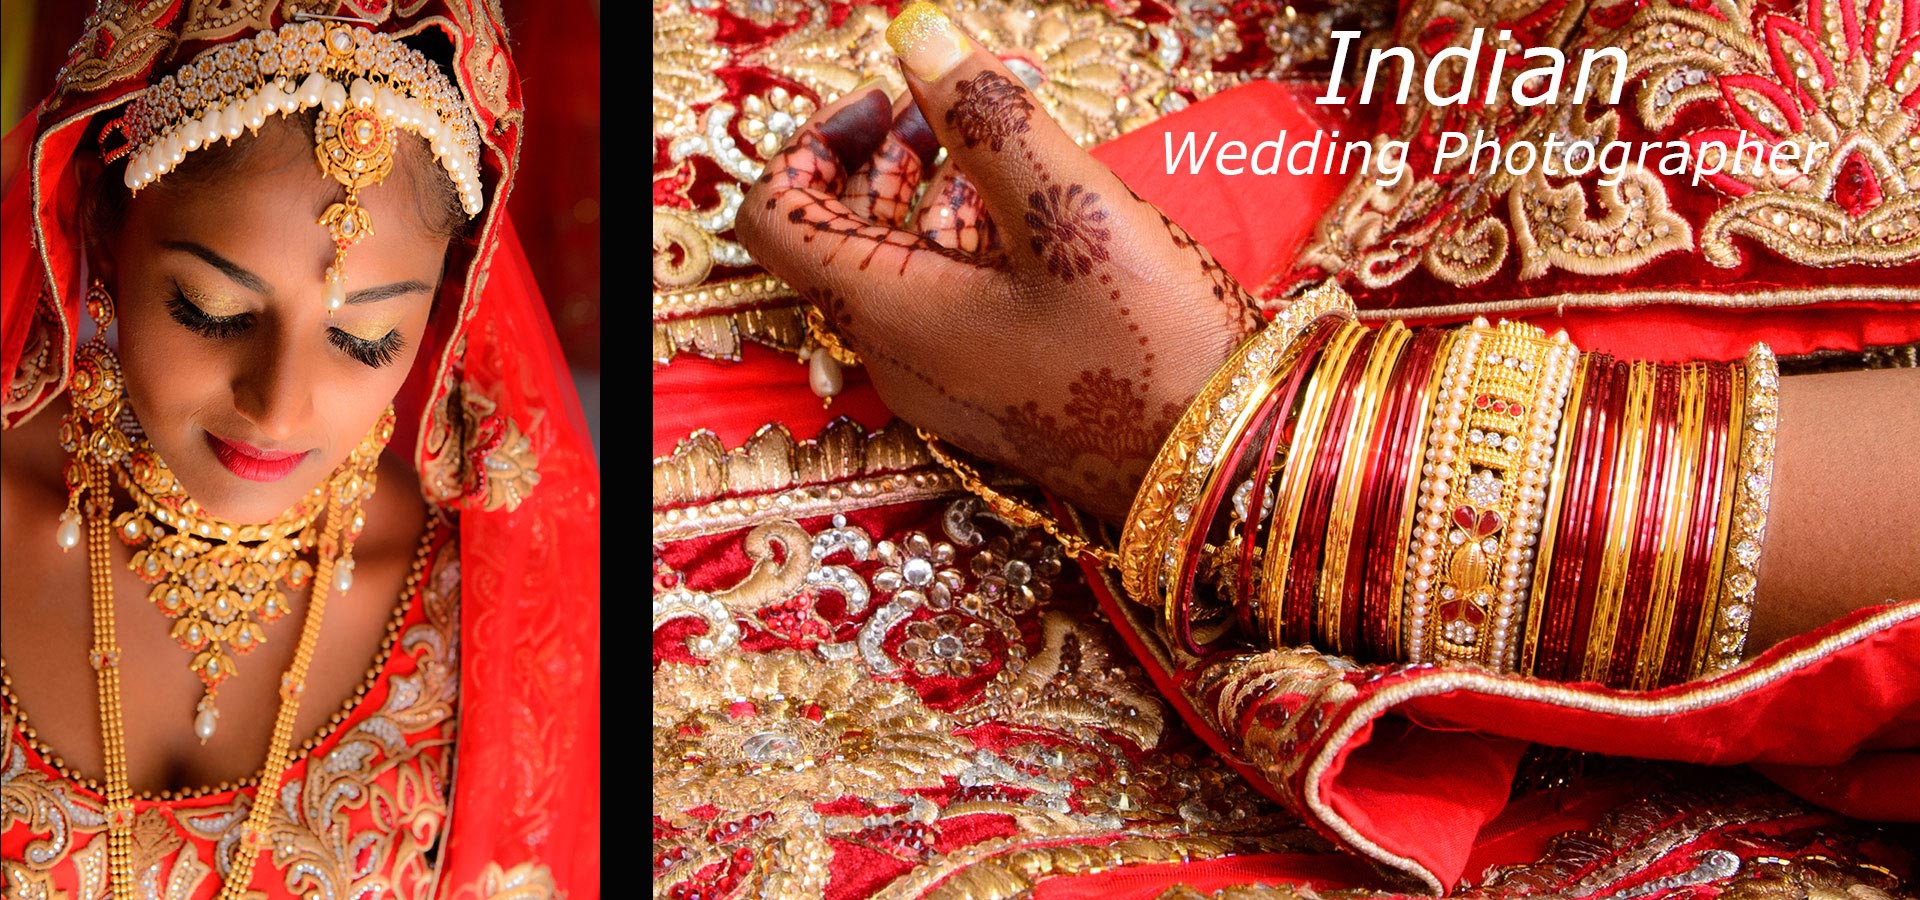 Creative Indian Wedding Photography Ideas - HD Wallpaper 